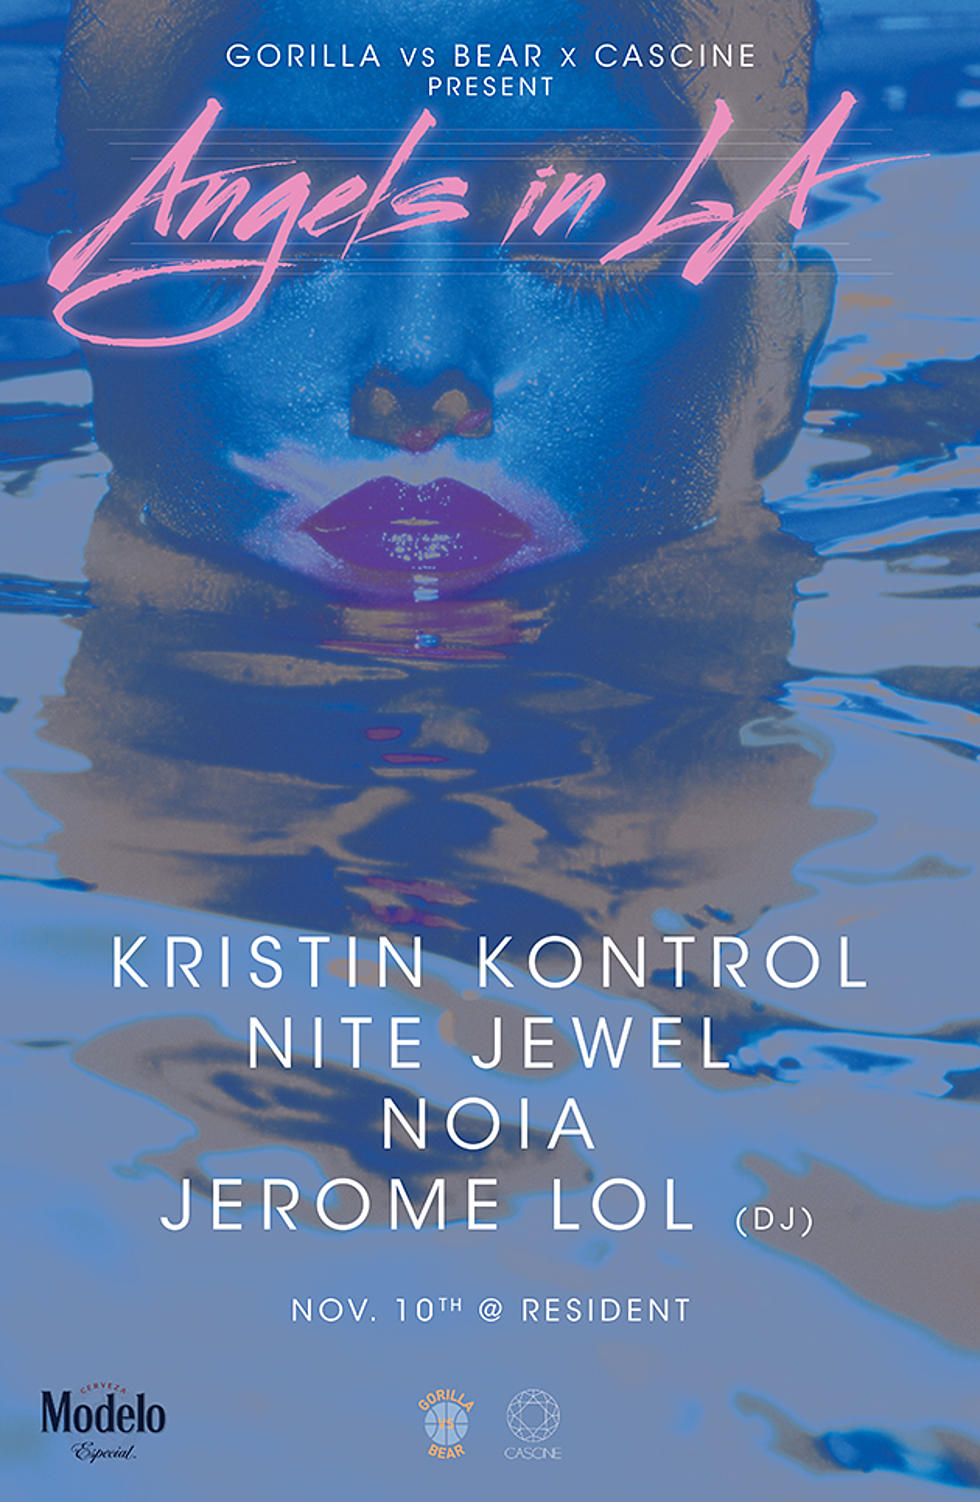 GvsB x Cascine present: Kristin Kontrol, Nite Jewel, NOIA + Jerome LOL in Los Angeles